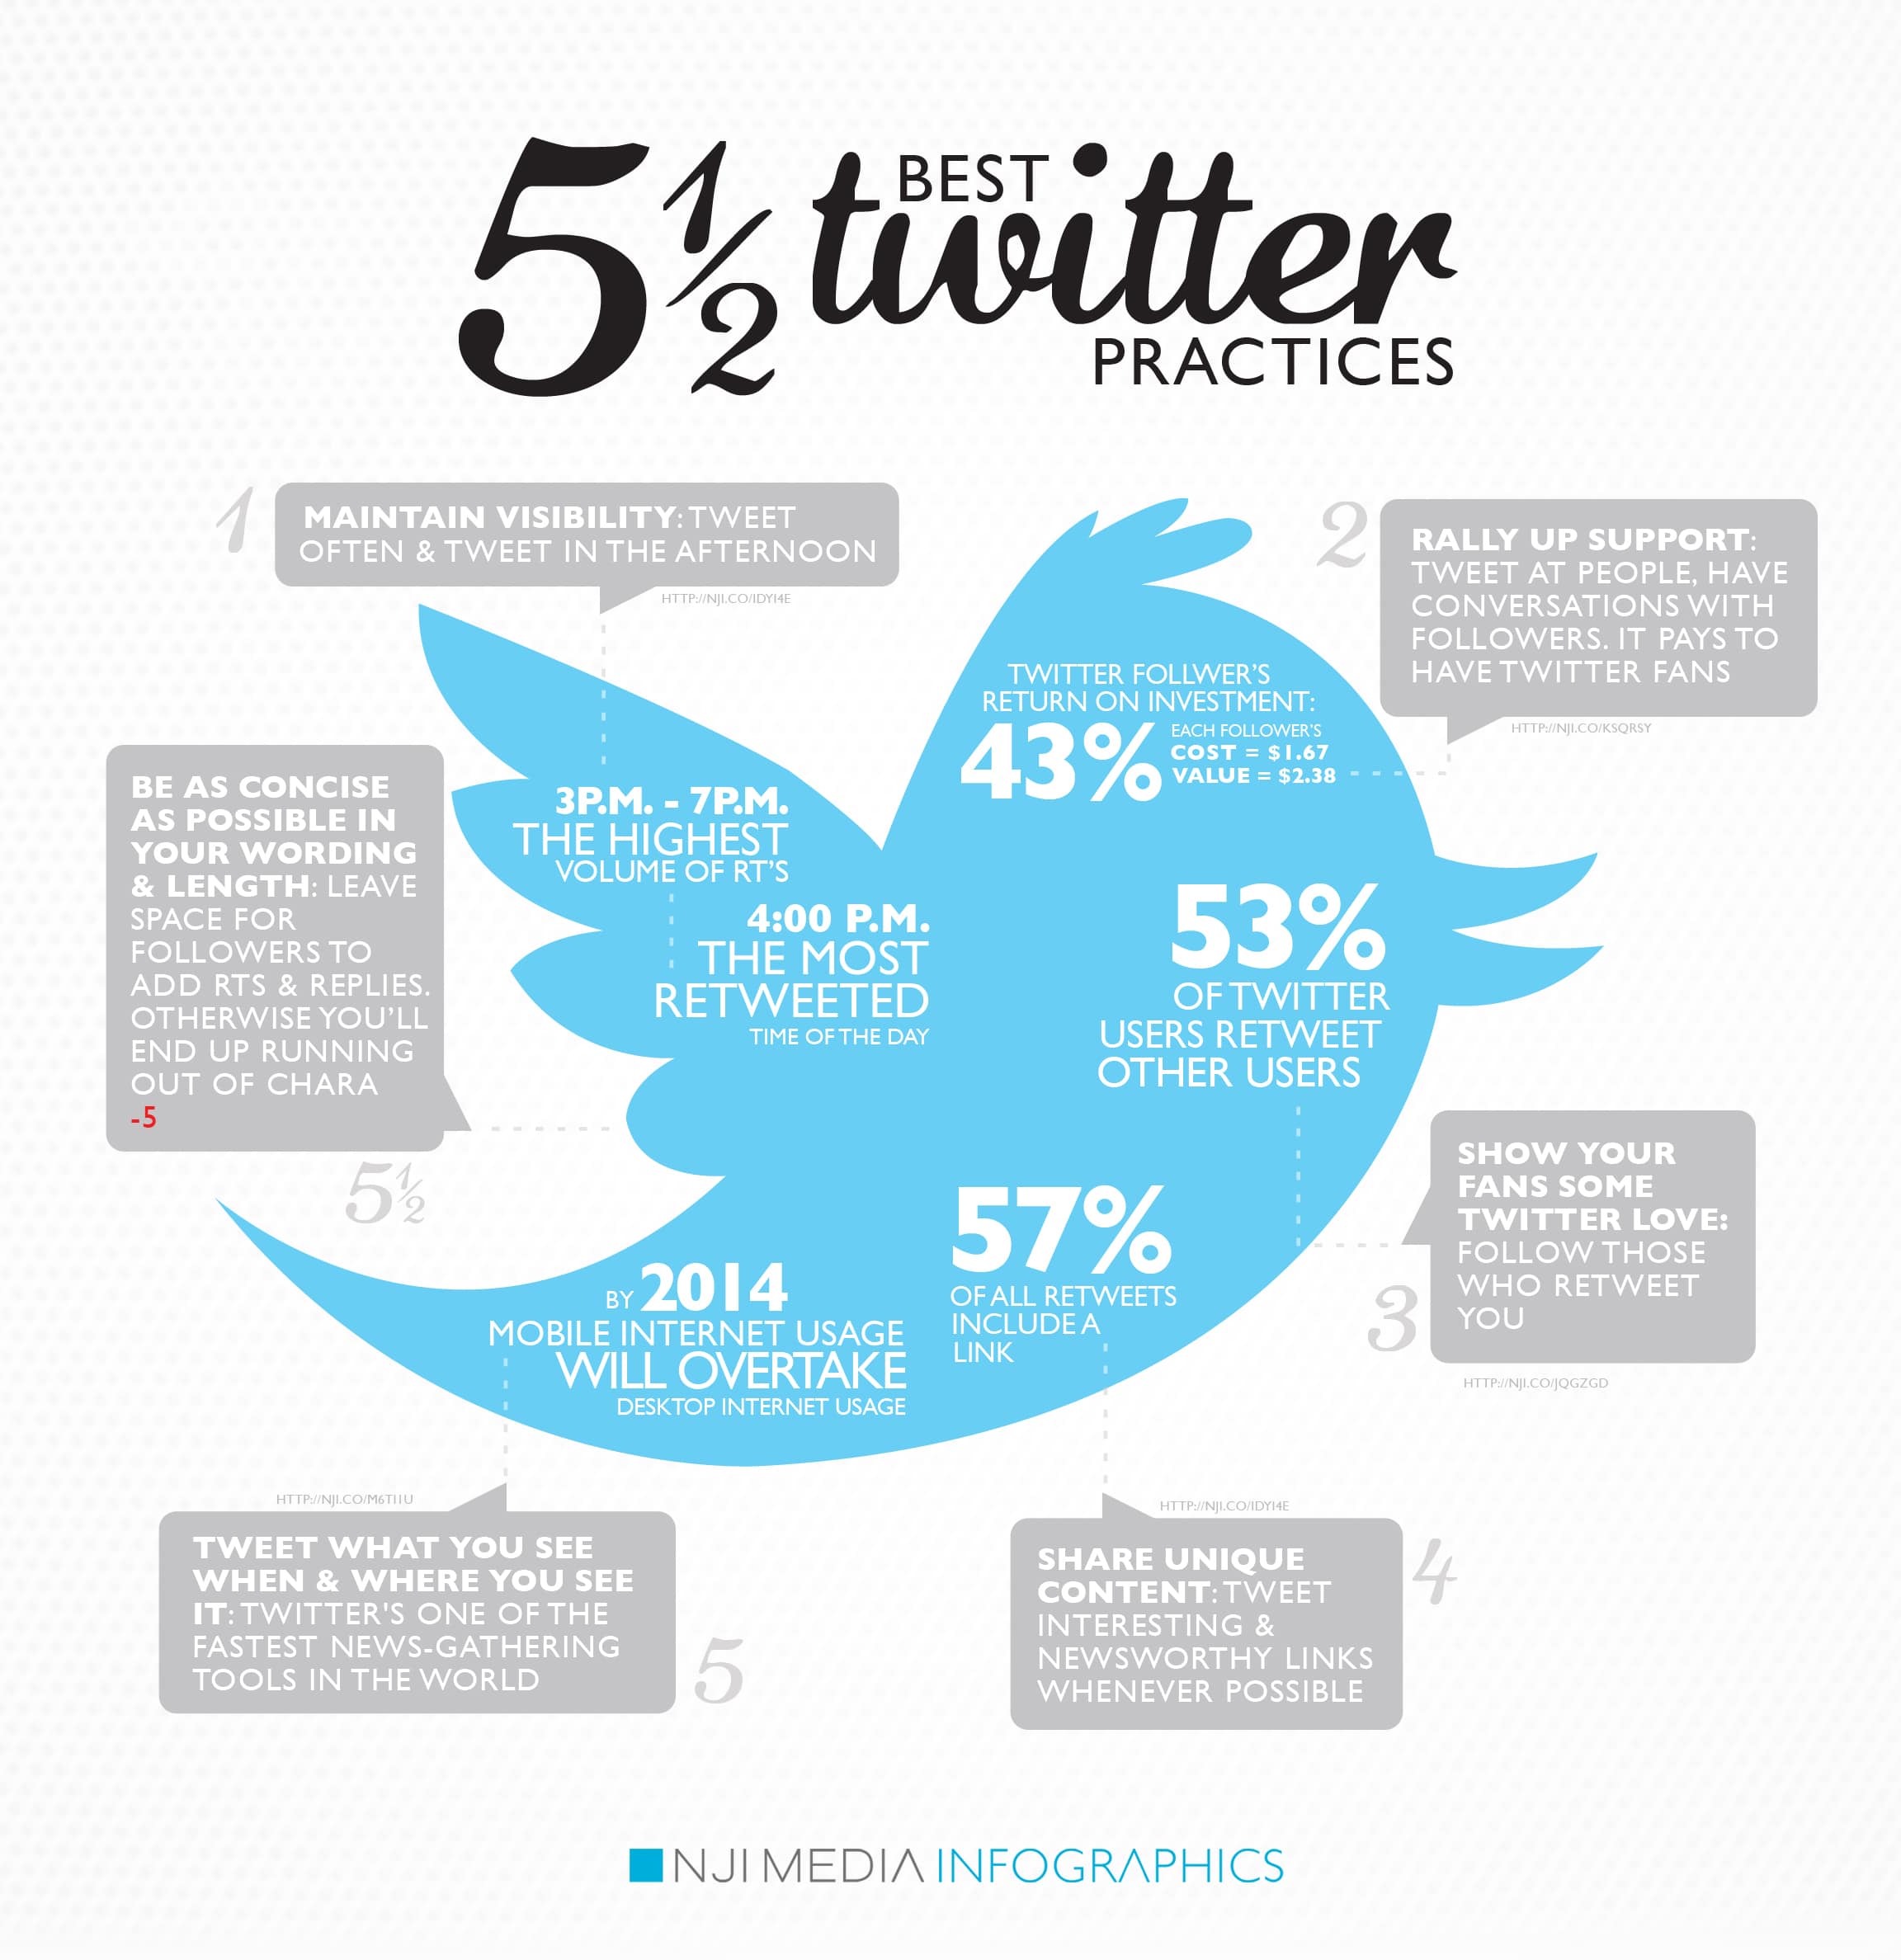 2012-best-twitter-practices-infographic